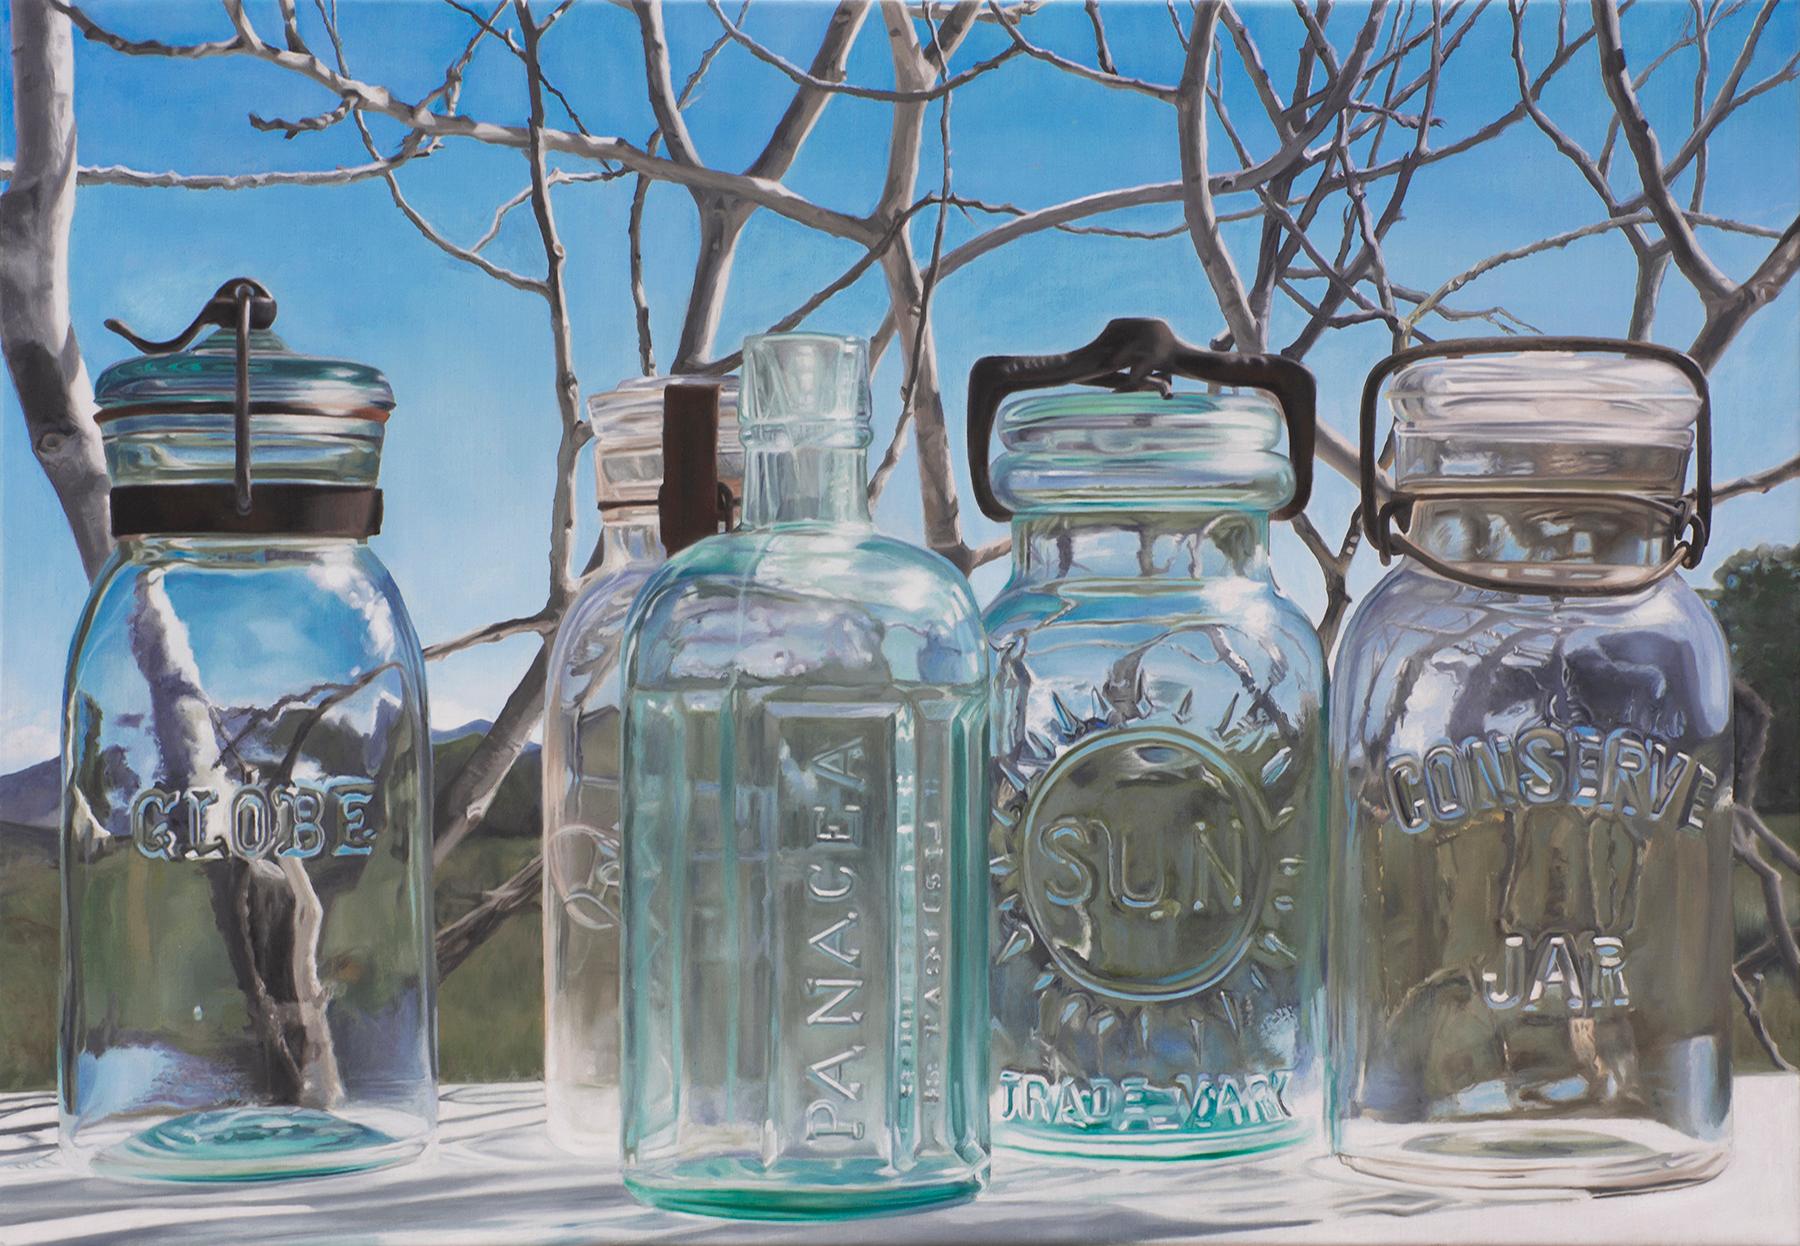 Steve Smulka Still-Life Painting - ENDLESS SKY, photo-realism, still-life, glass jars, blue sky, winter backdrop